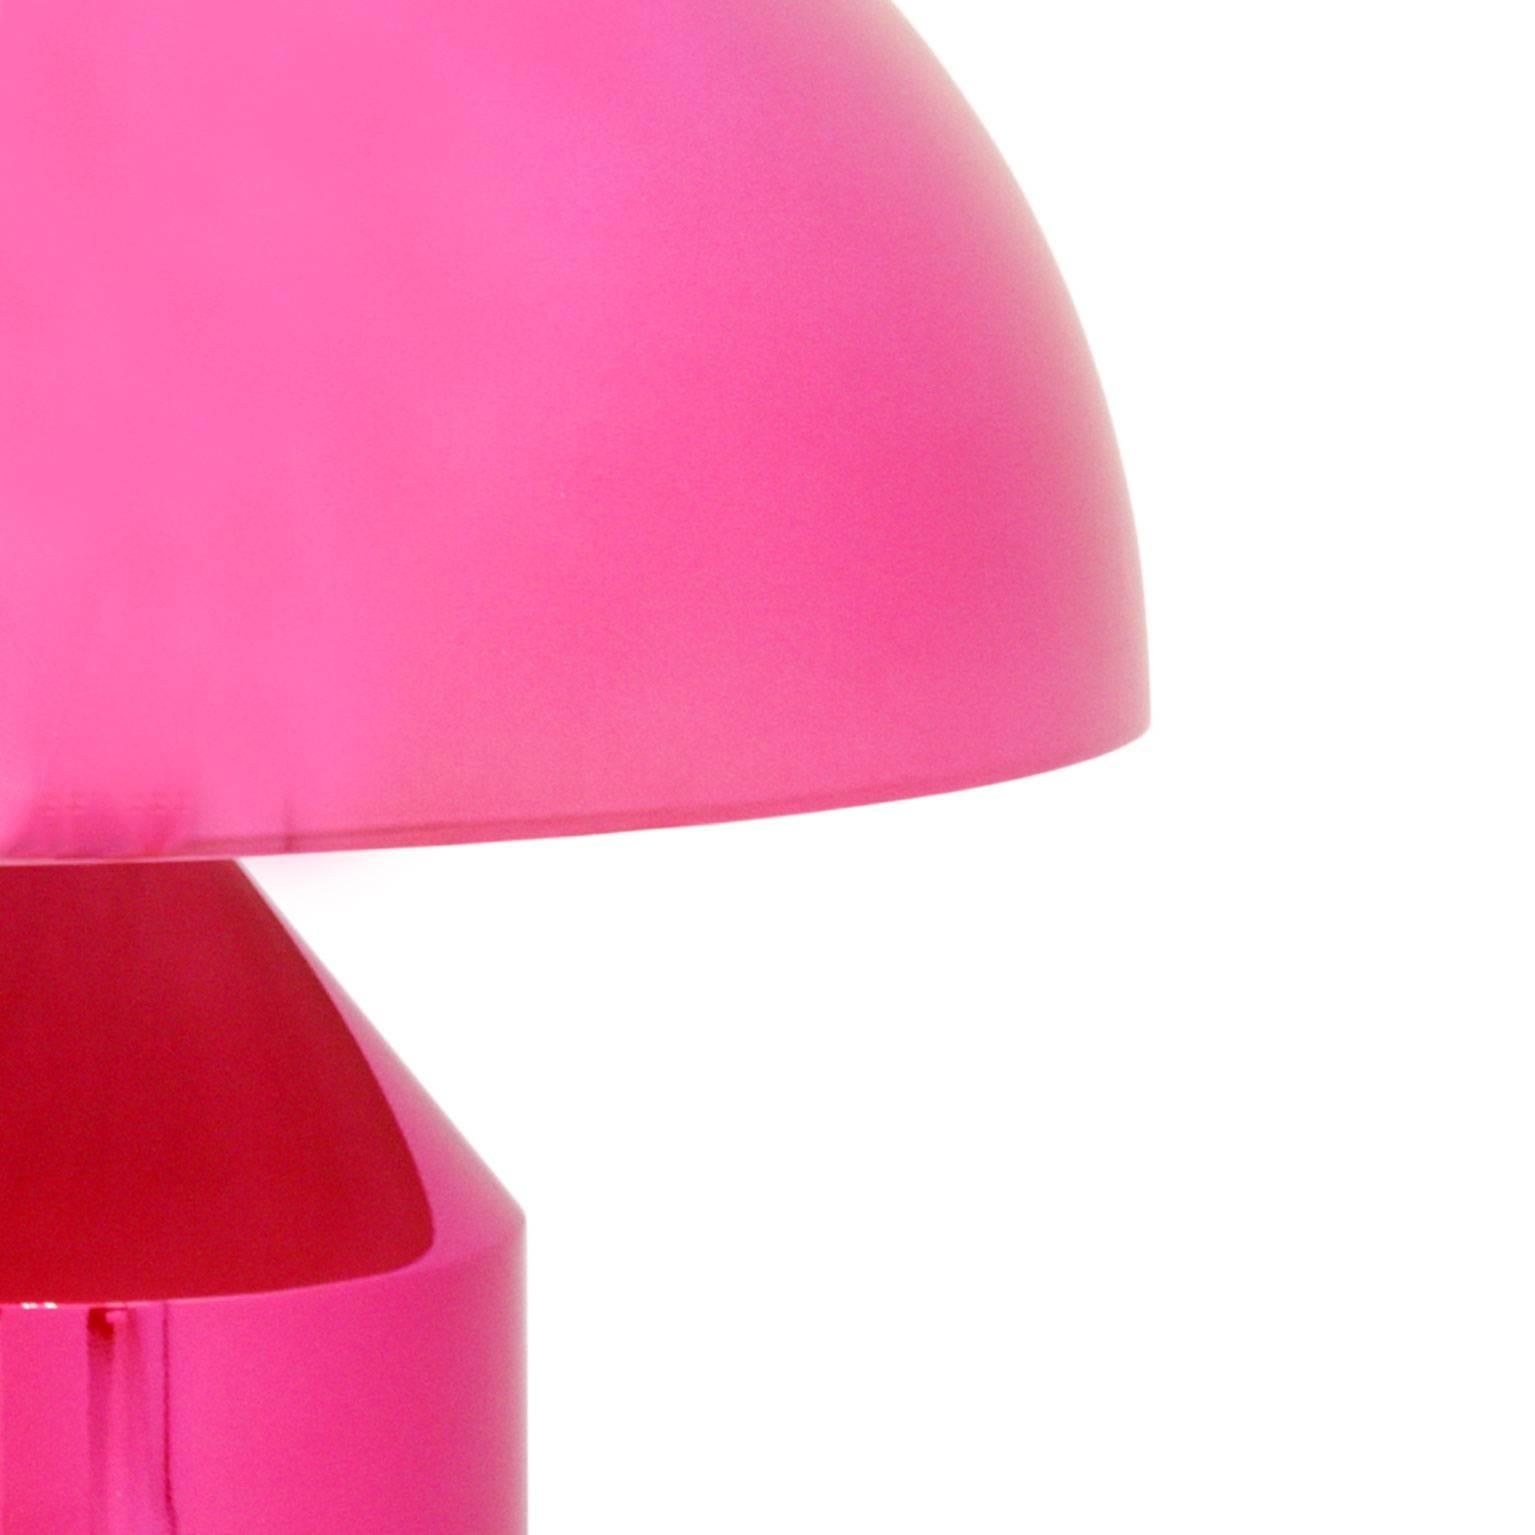 Table lamp model 